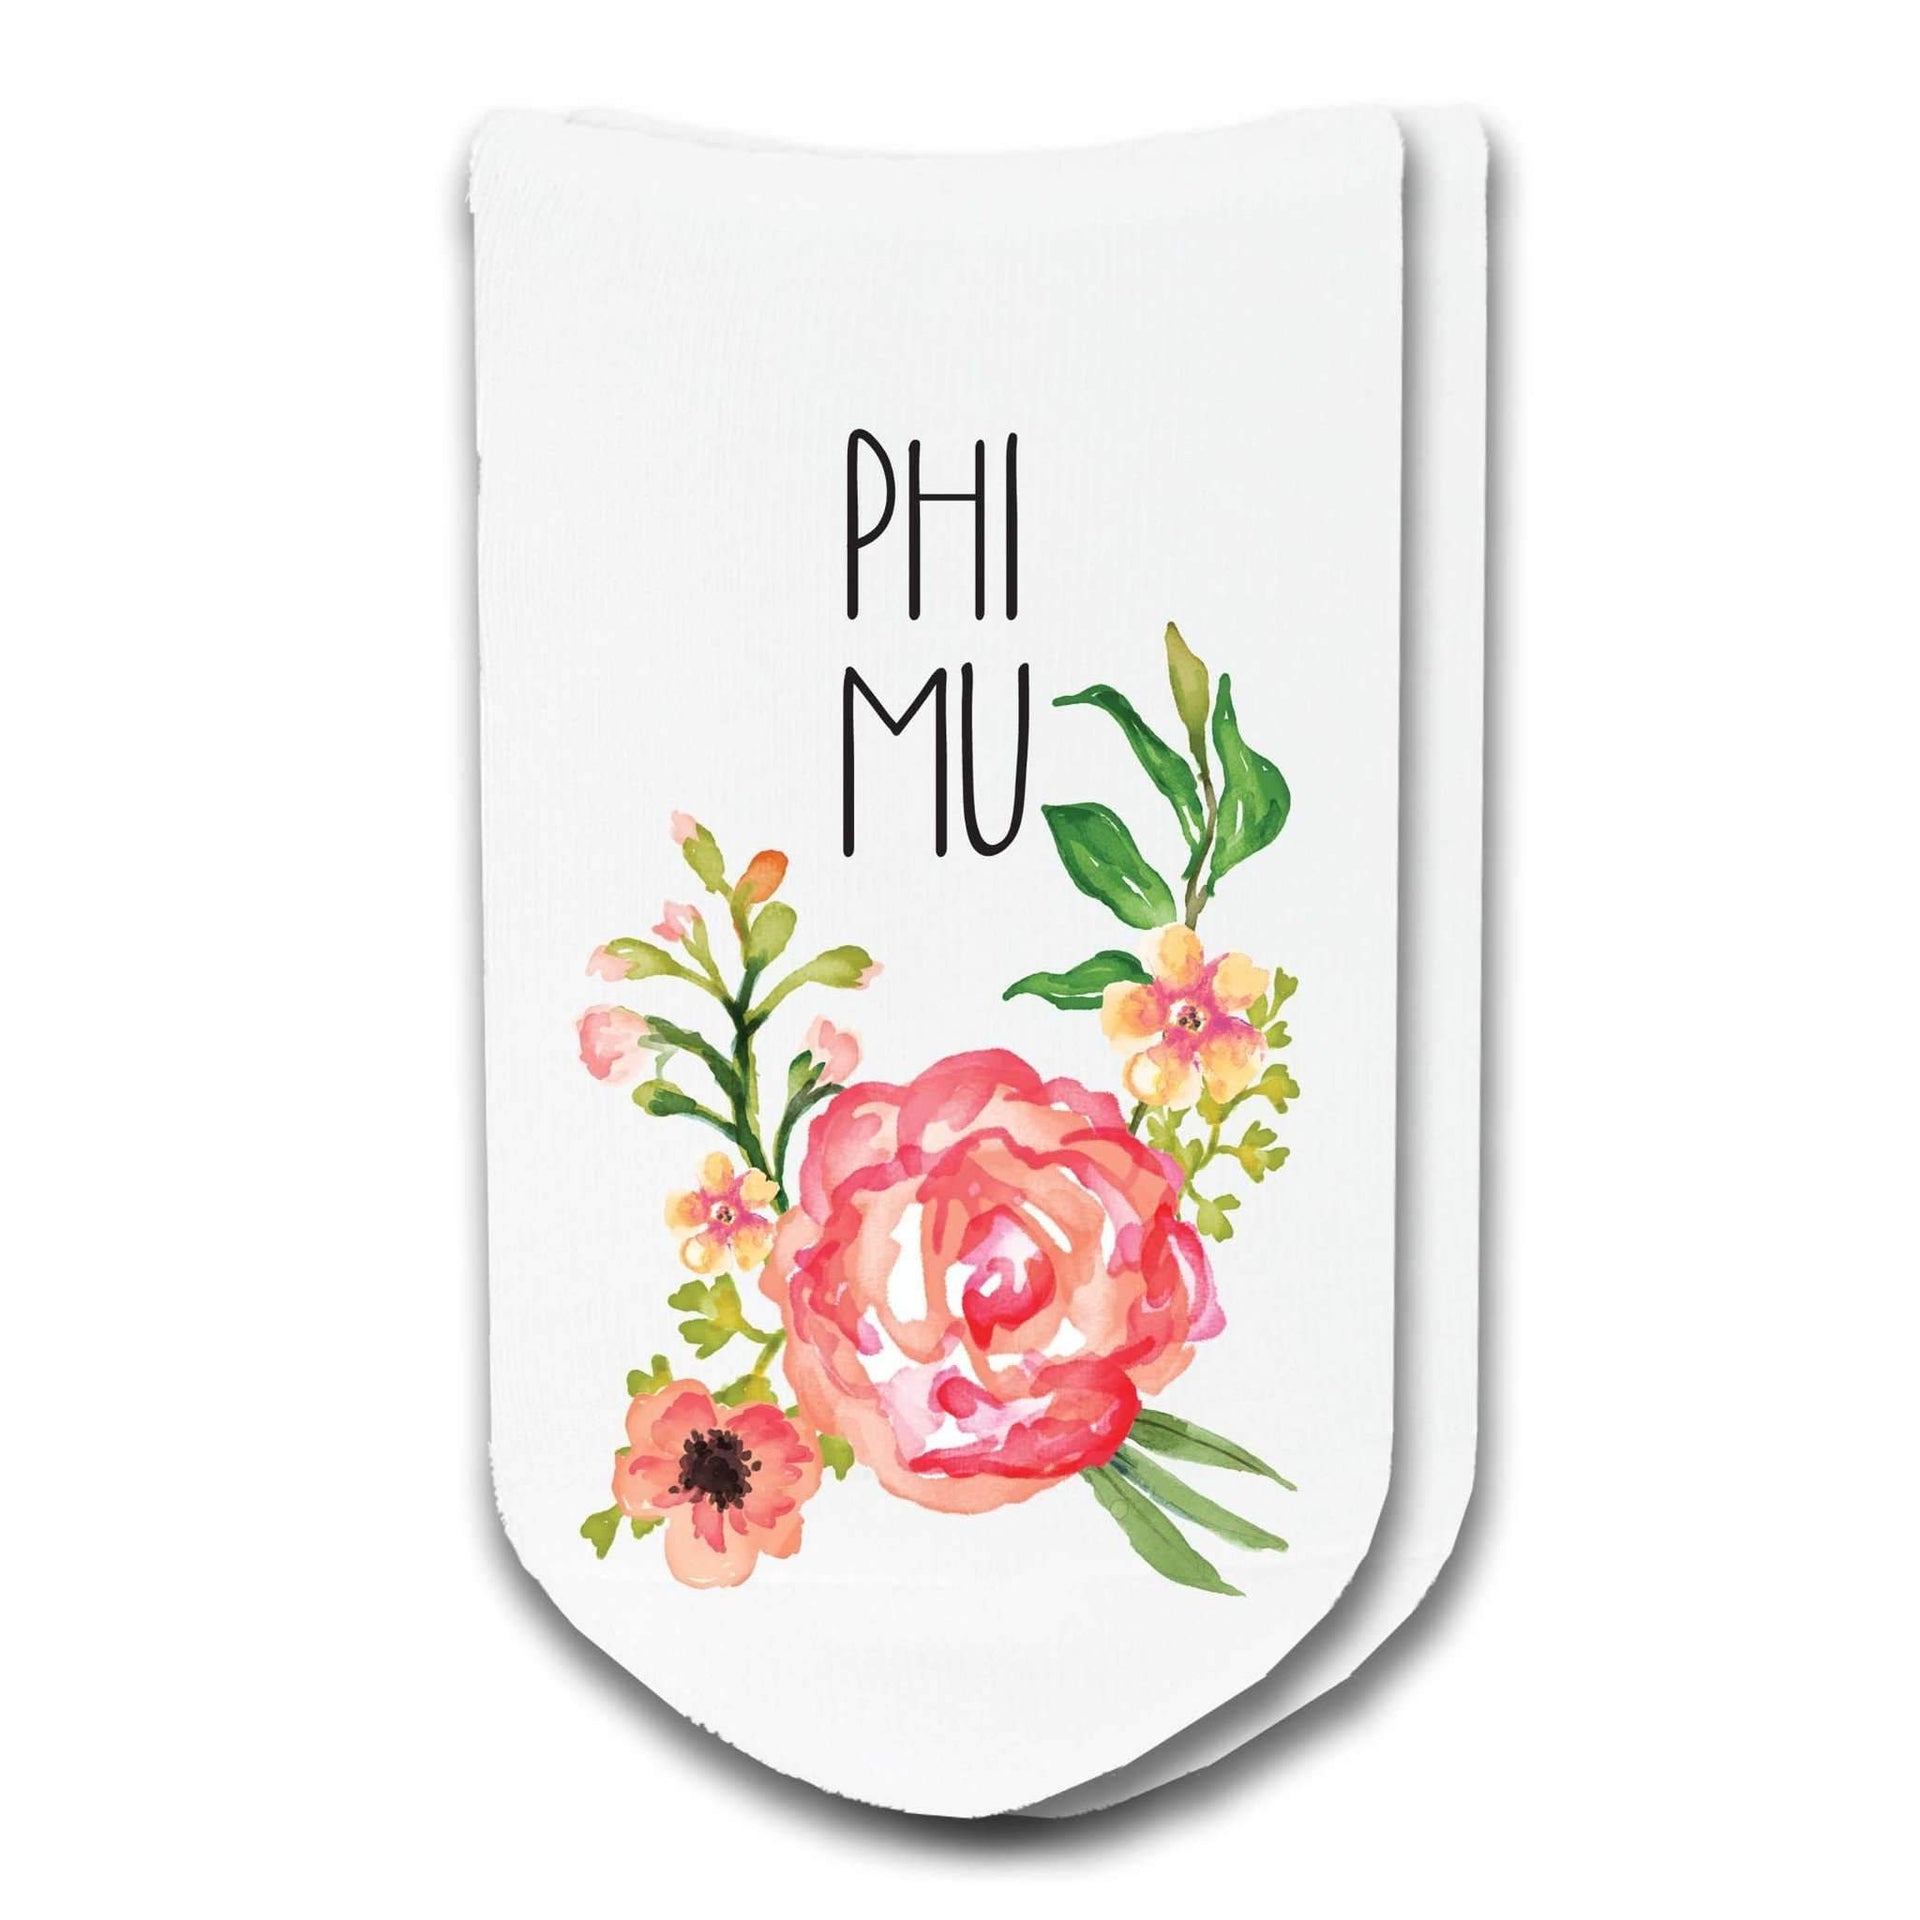 Phi Mu sorority name watercolor floral design custom printed on white cotton no show socks